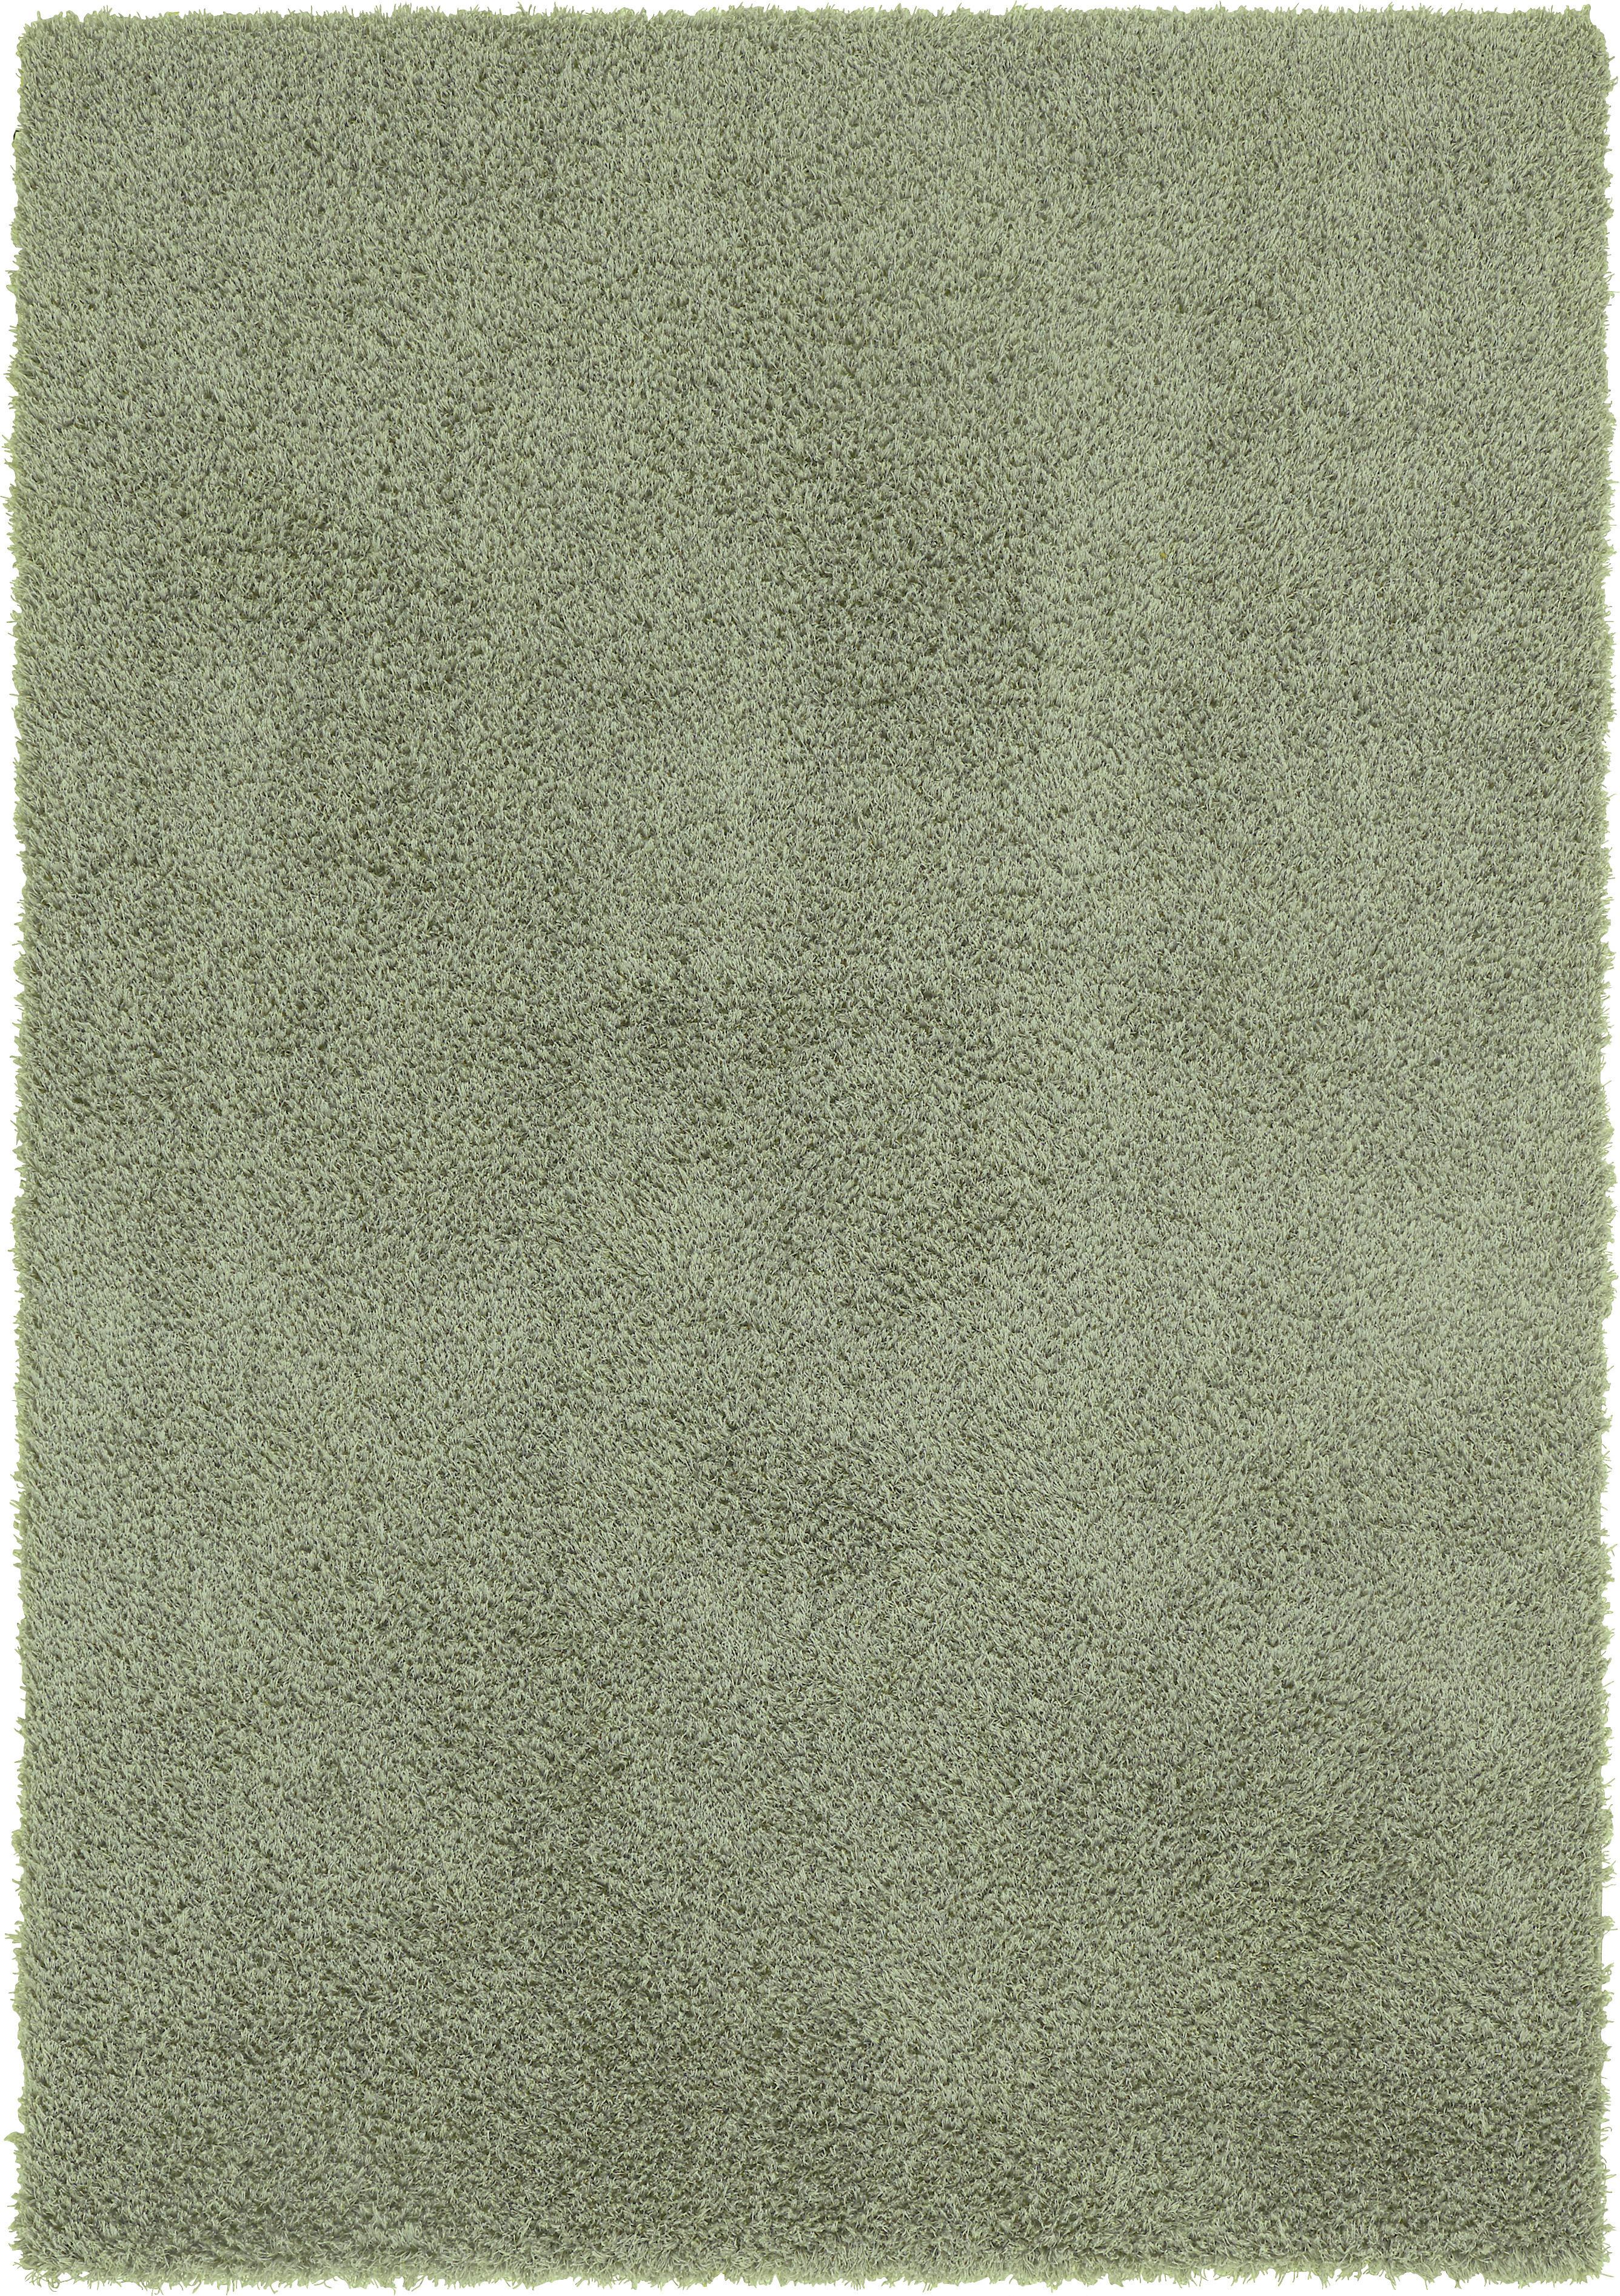 Koberec Shaggy Stefan 1, 80/150cm, Zelená - zelená, Moderný, textil (80/150cm) - Modern Living